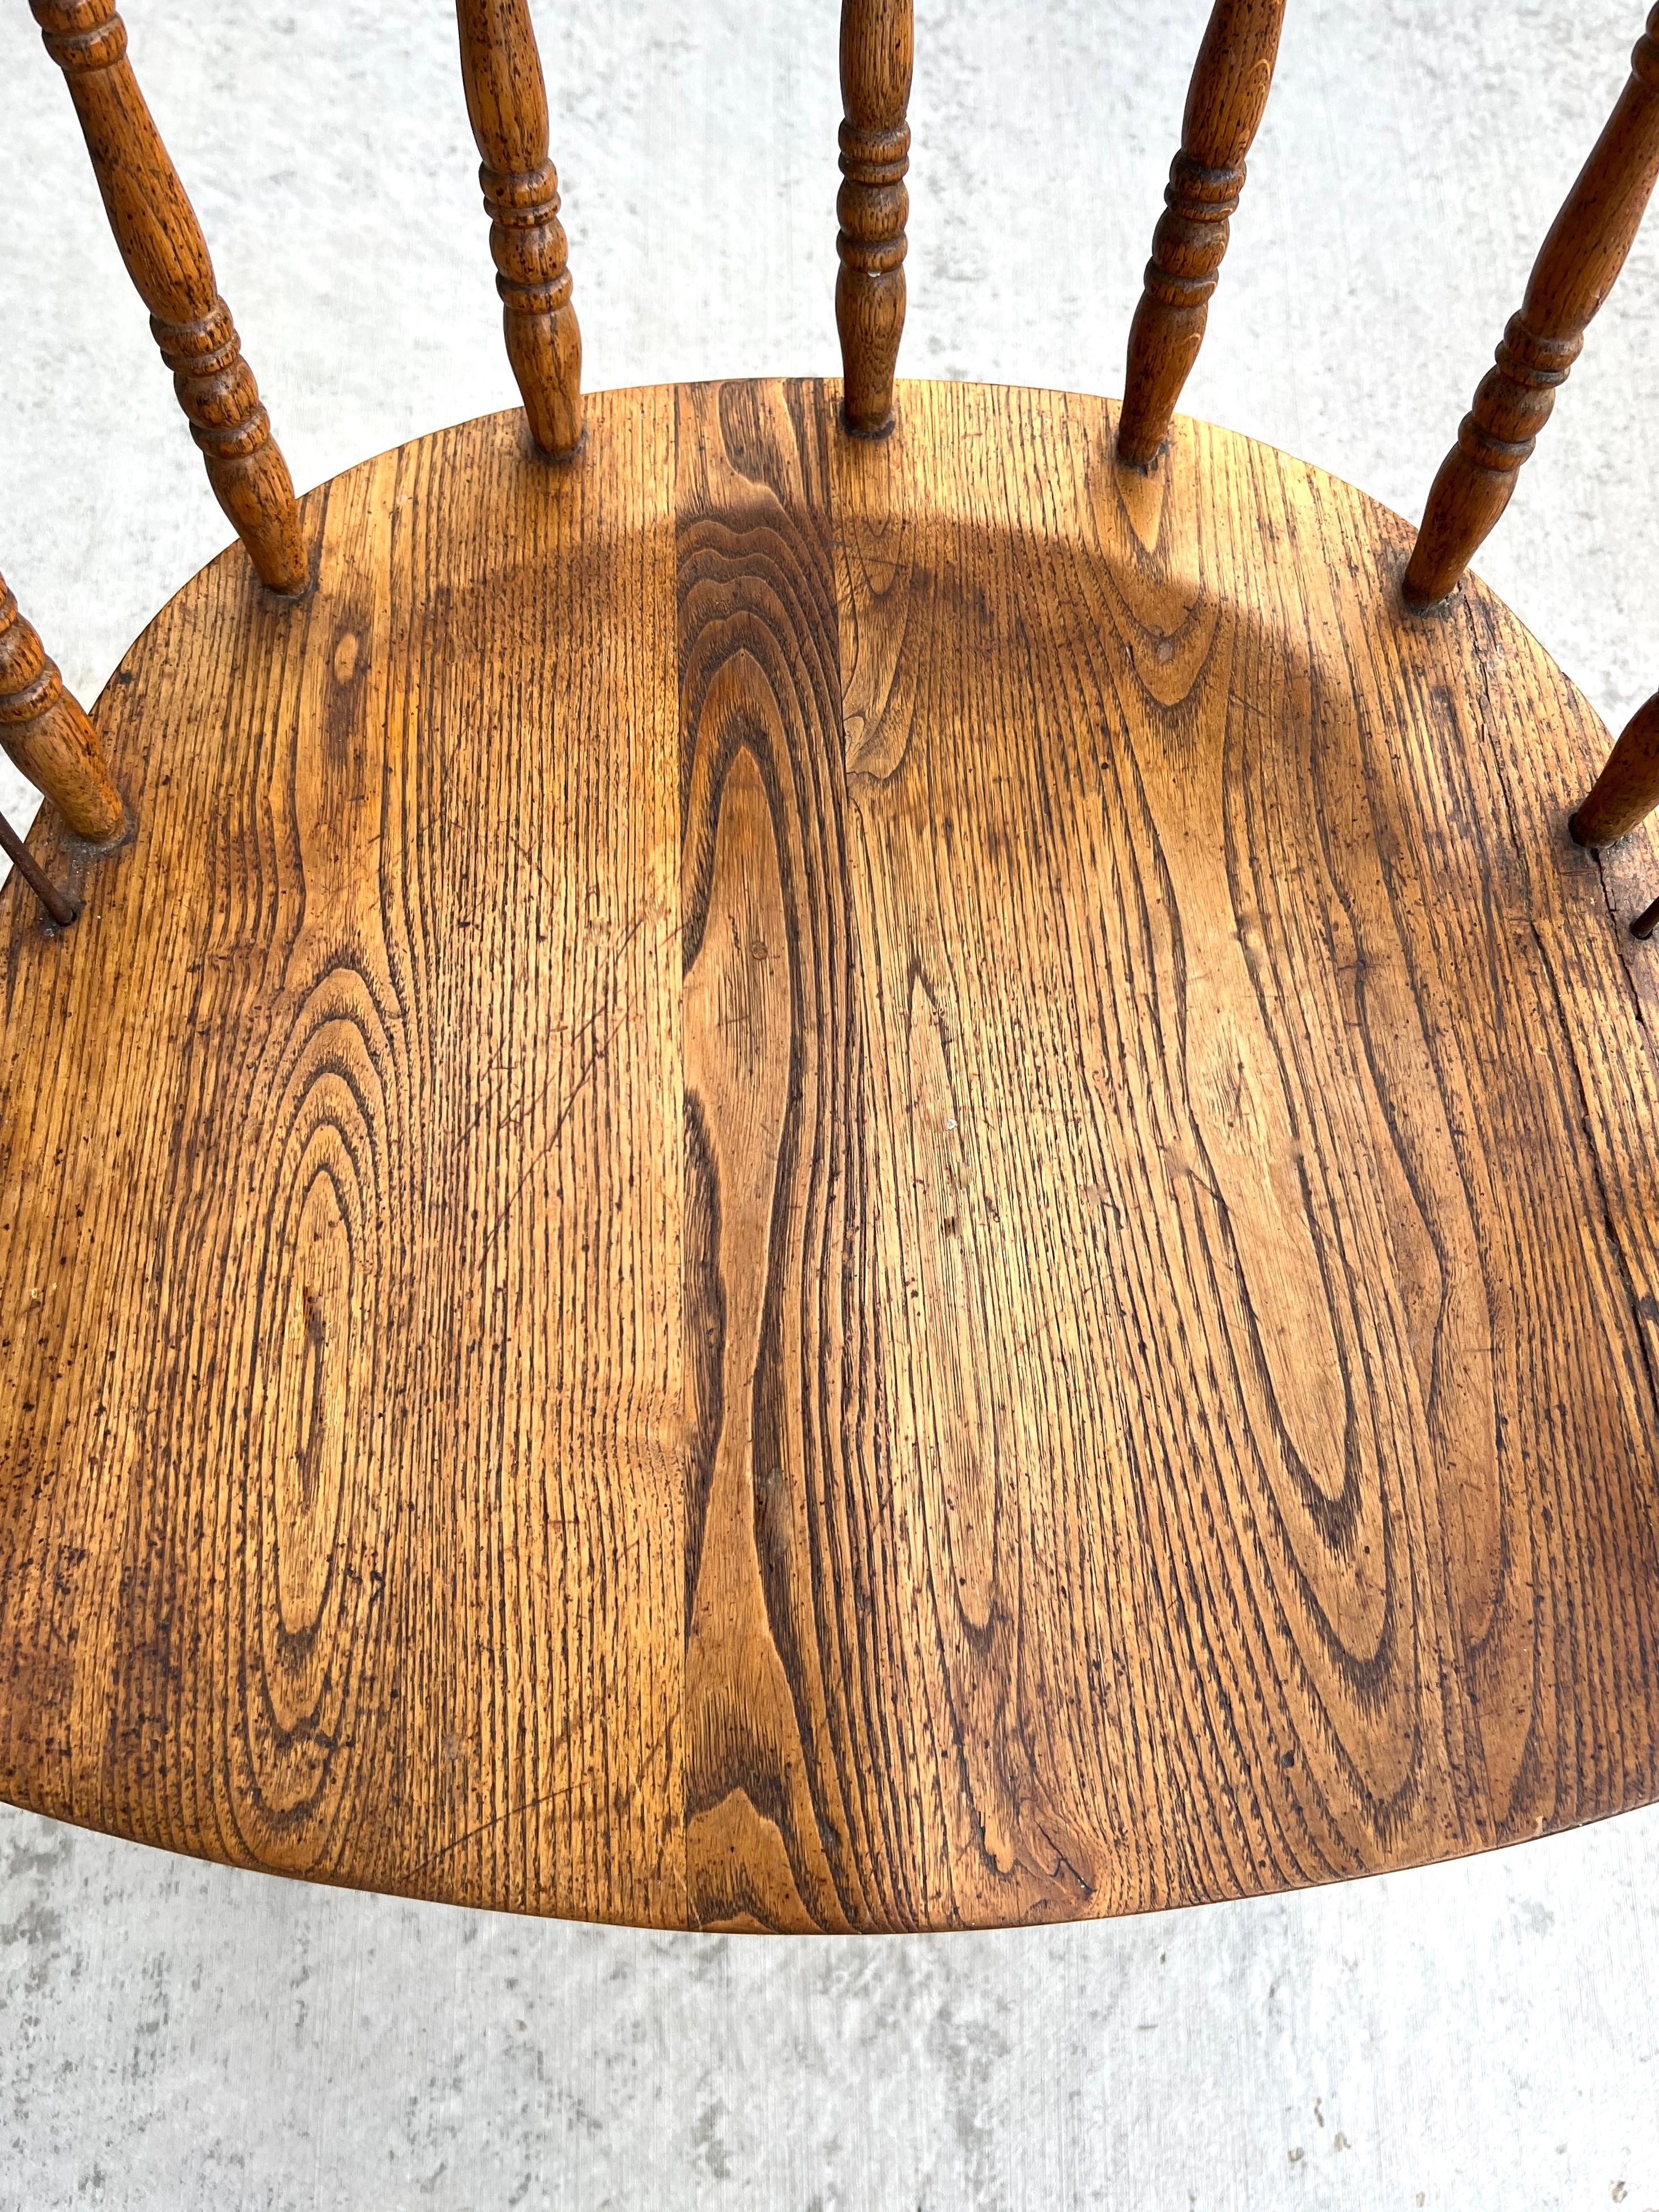 Early 20th Century Antique Mismatched Barrel Back Oak Wood Pub Captain's Chairs 4